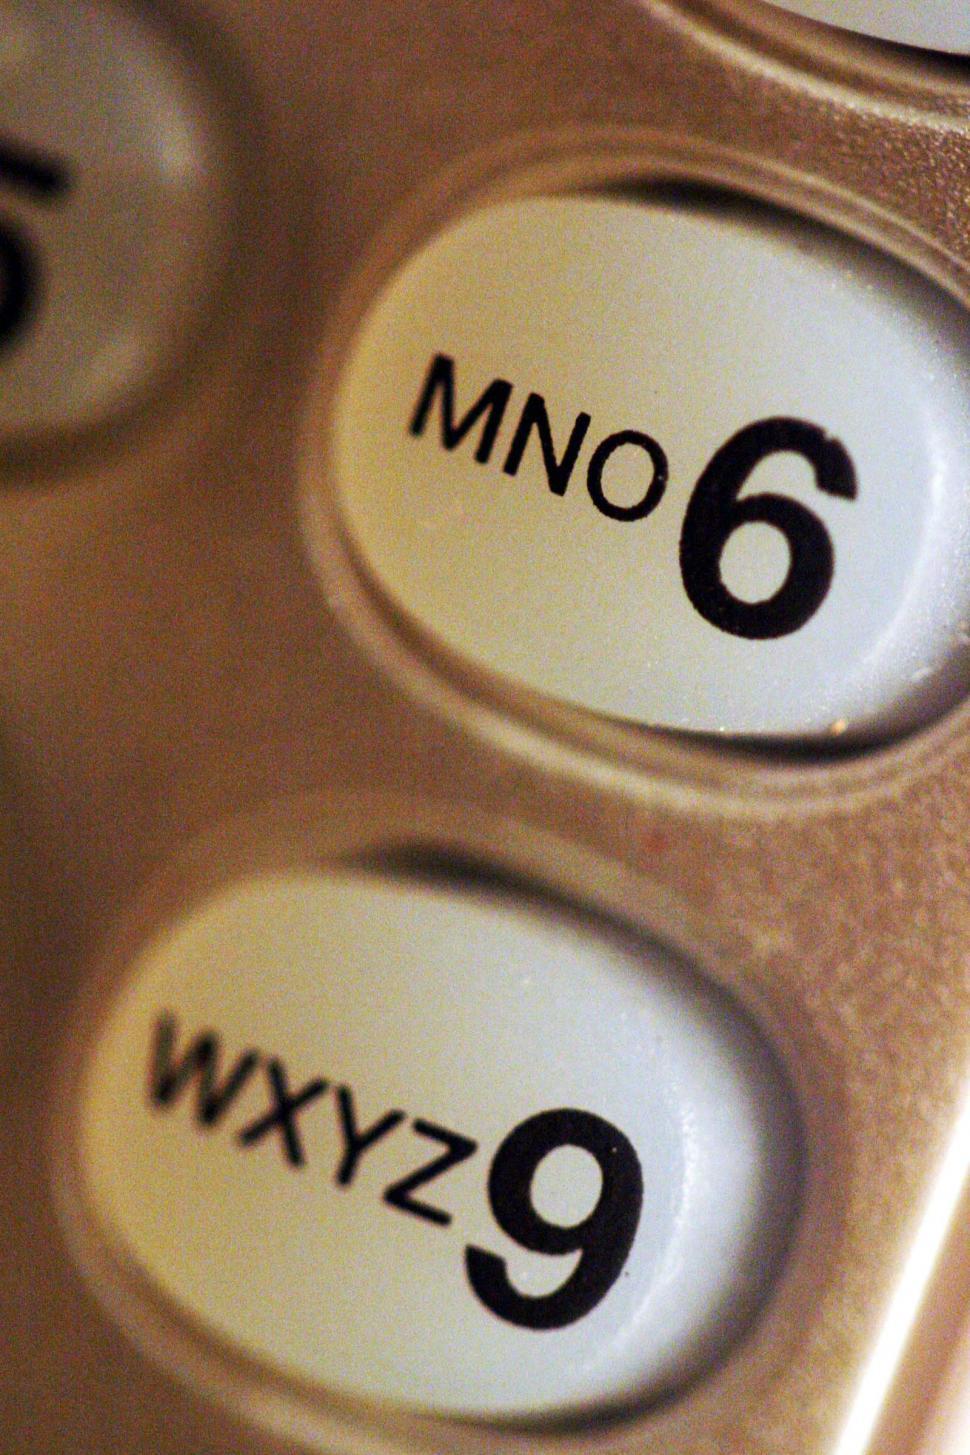 Free Image of phone telephone buttons keys keypad talk telecommunications calls numbers letters six nine wxyz mno 